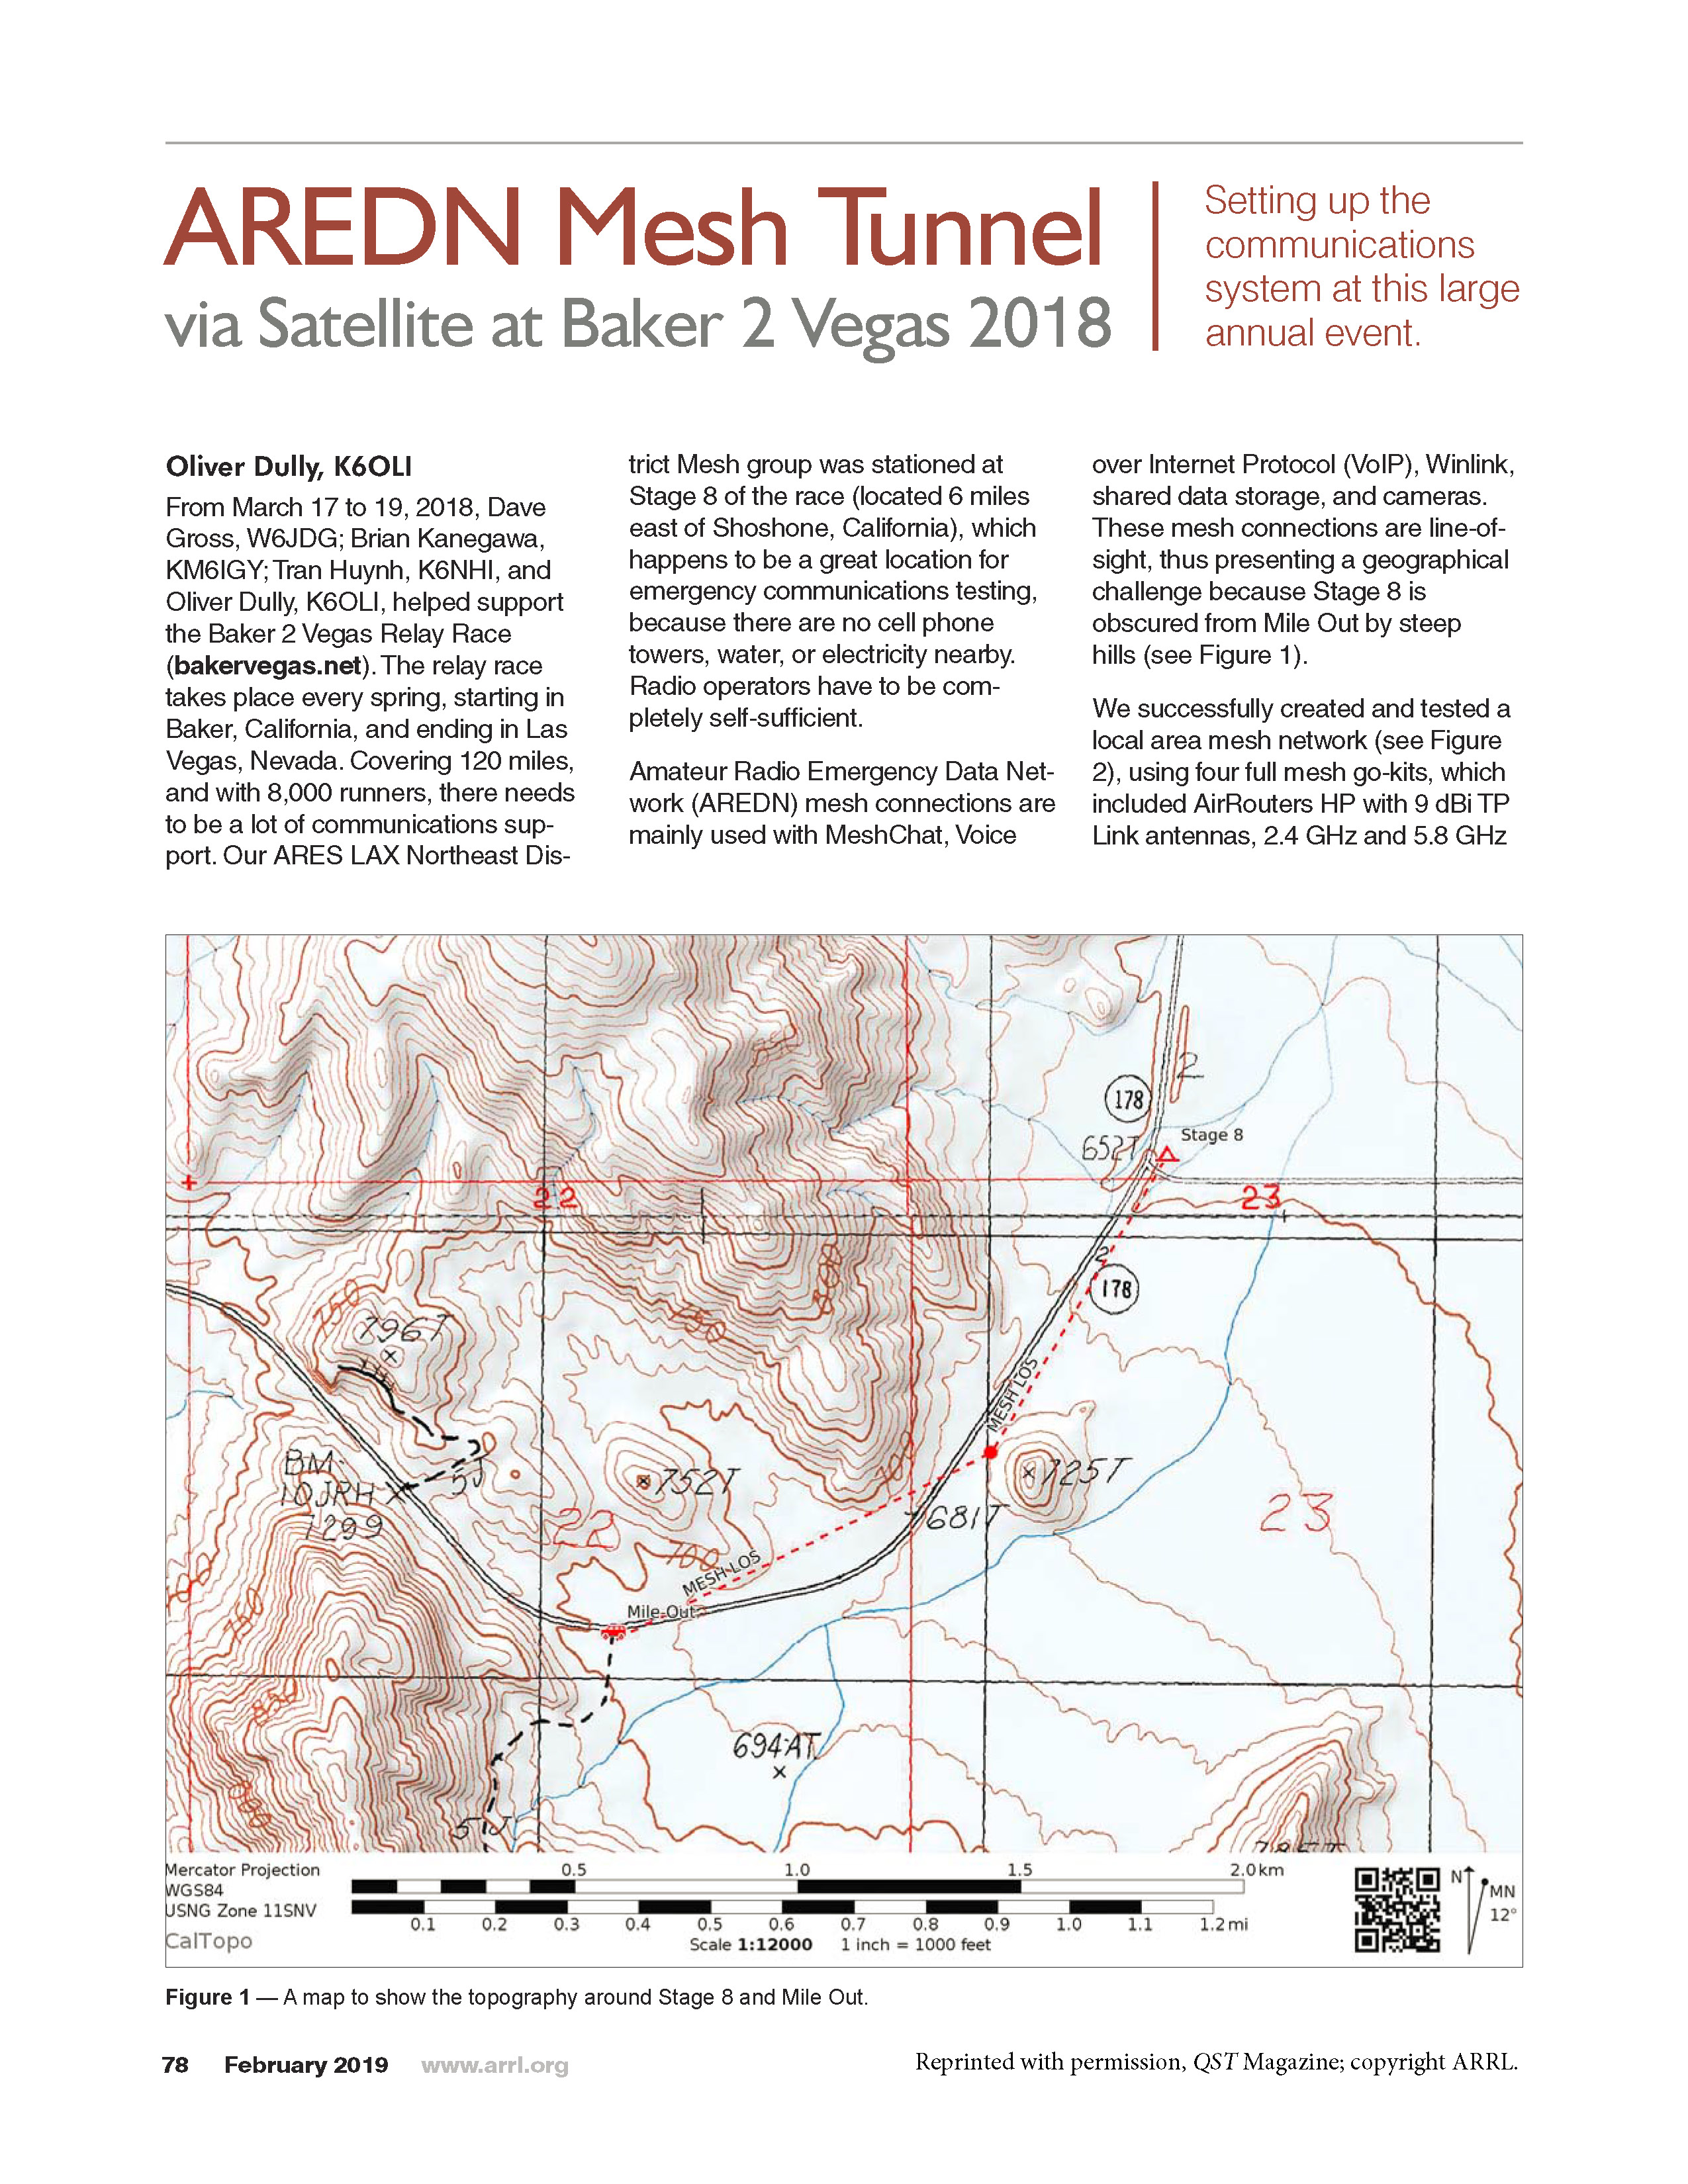 Baker2Vegas 2018 QST Feb 2019 page 1